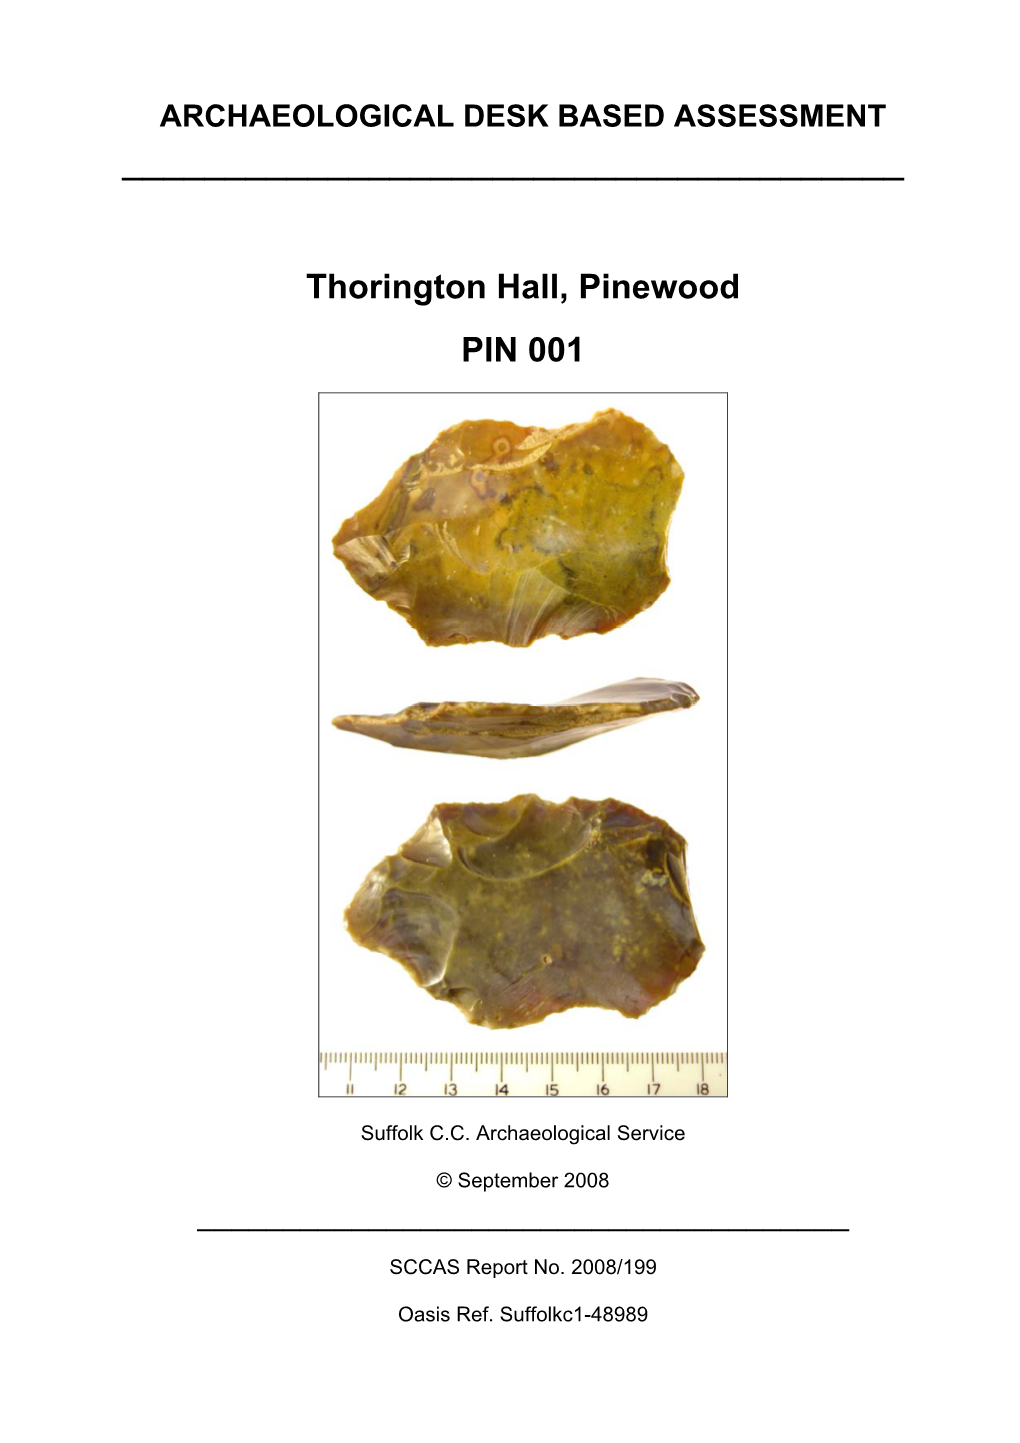 Thorington Hall, Pinewood PIN